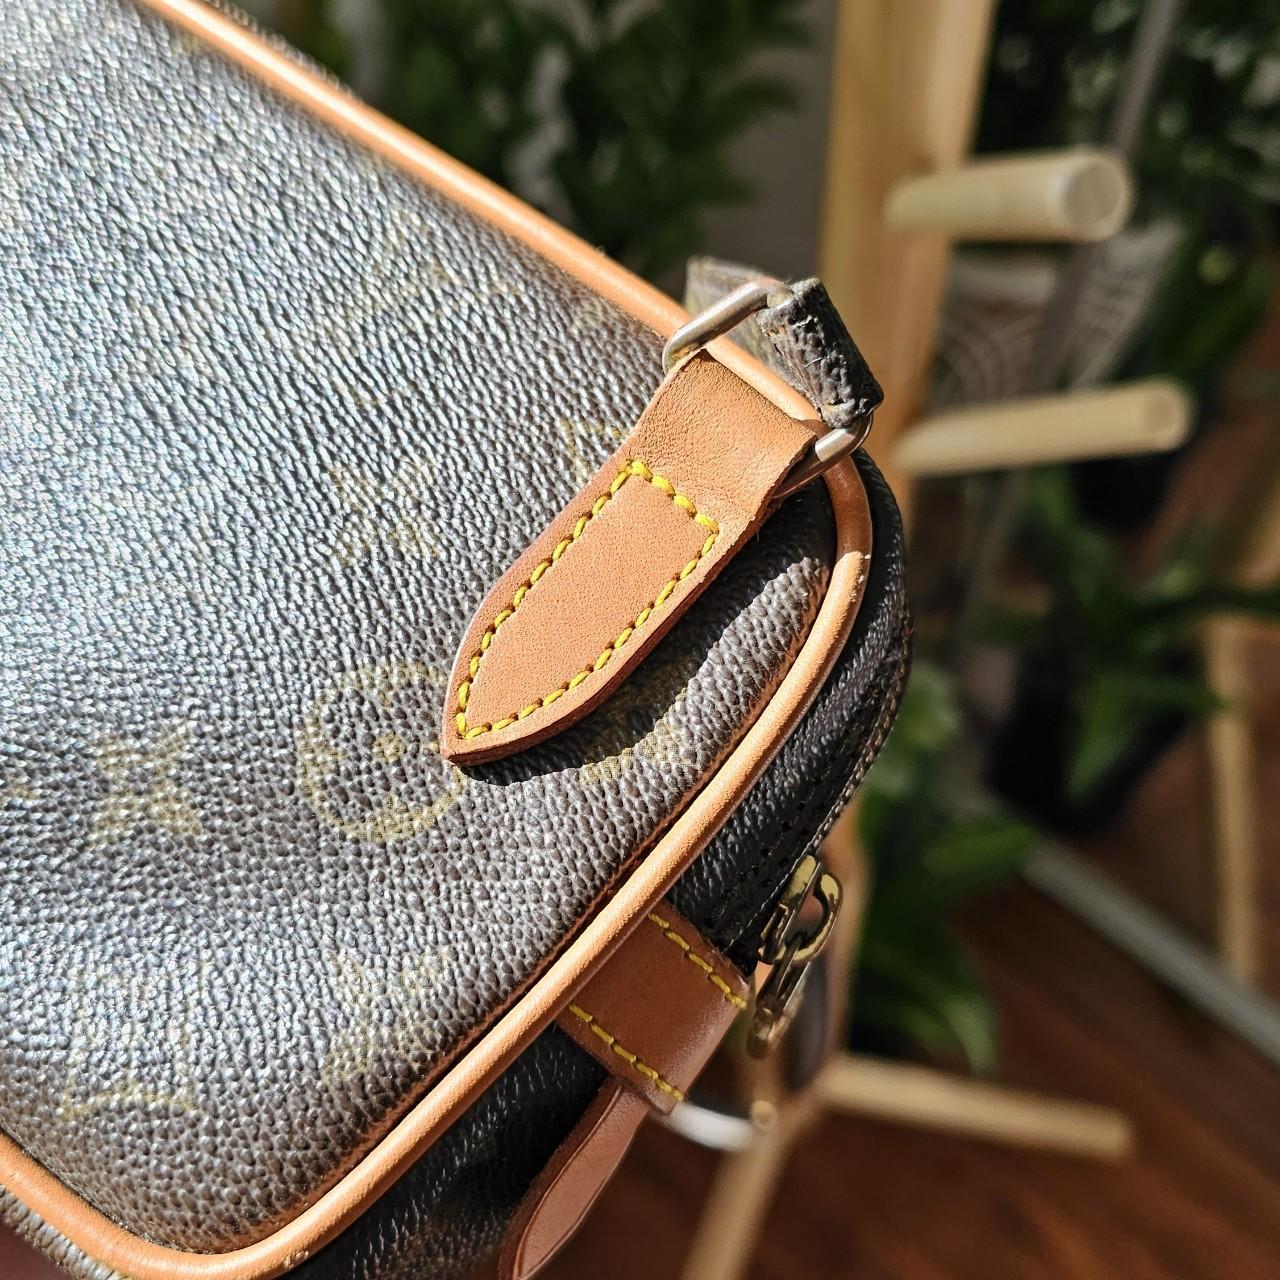 Refurbished Louis Vuitton Shoulder Bag - open to - Depop